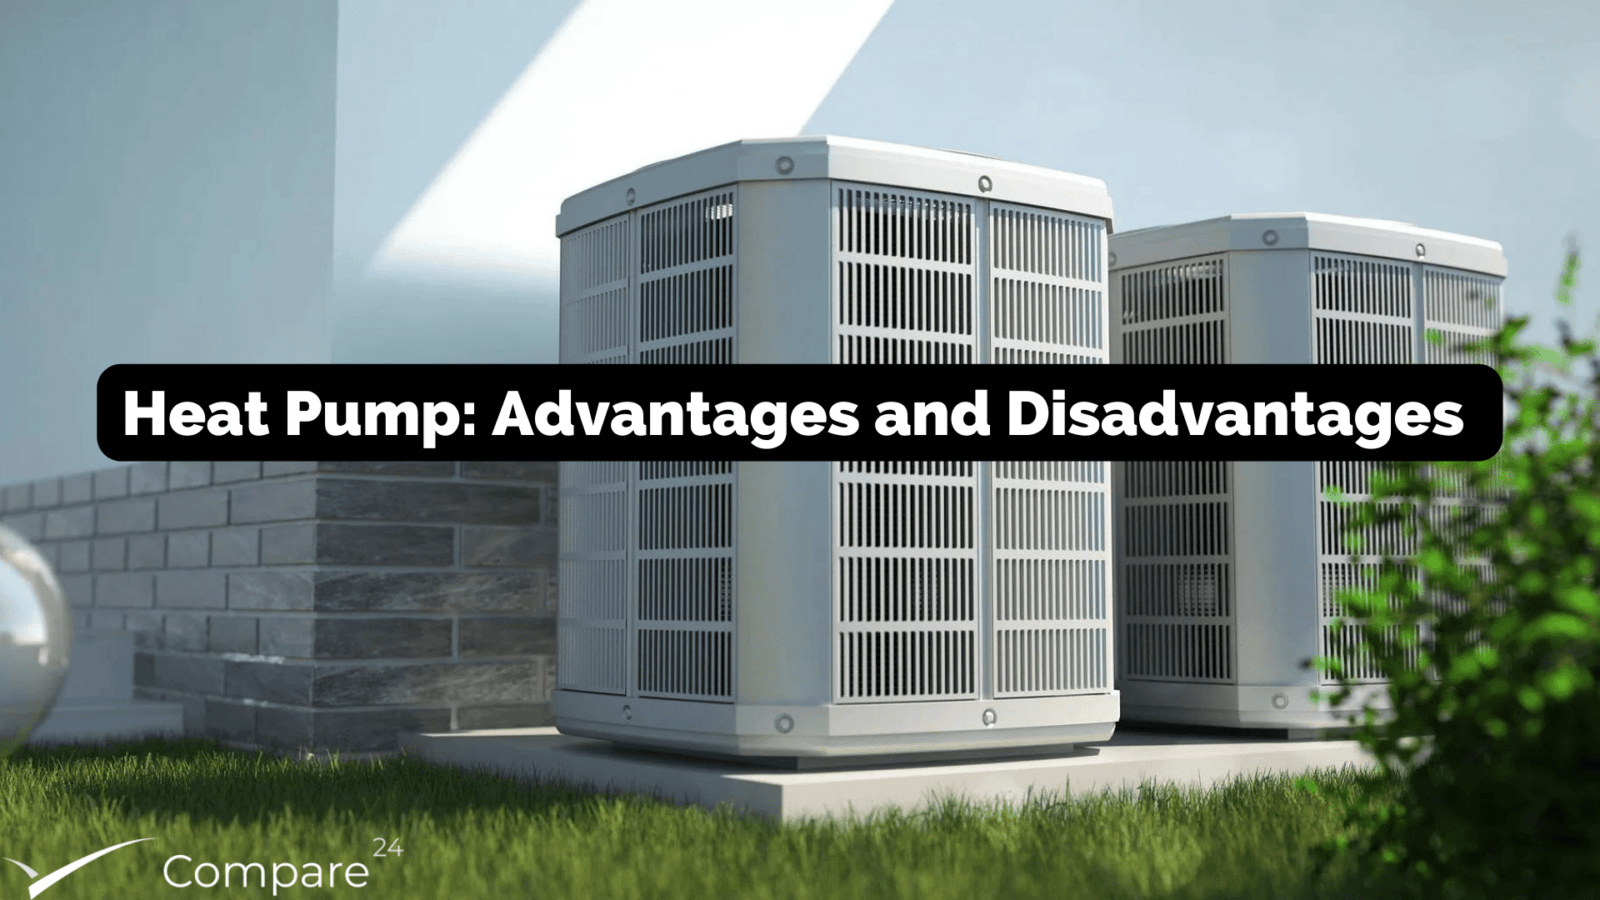 Heat pump advantages and disadvantages